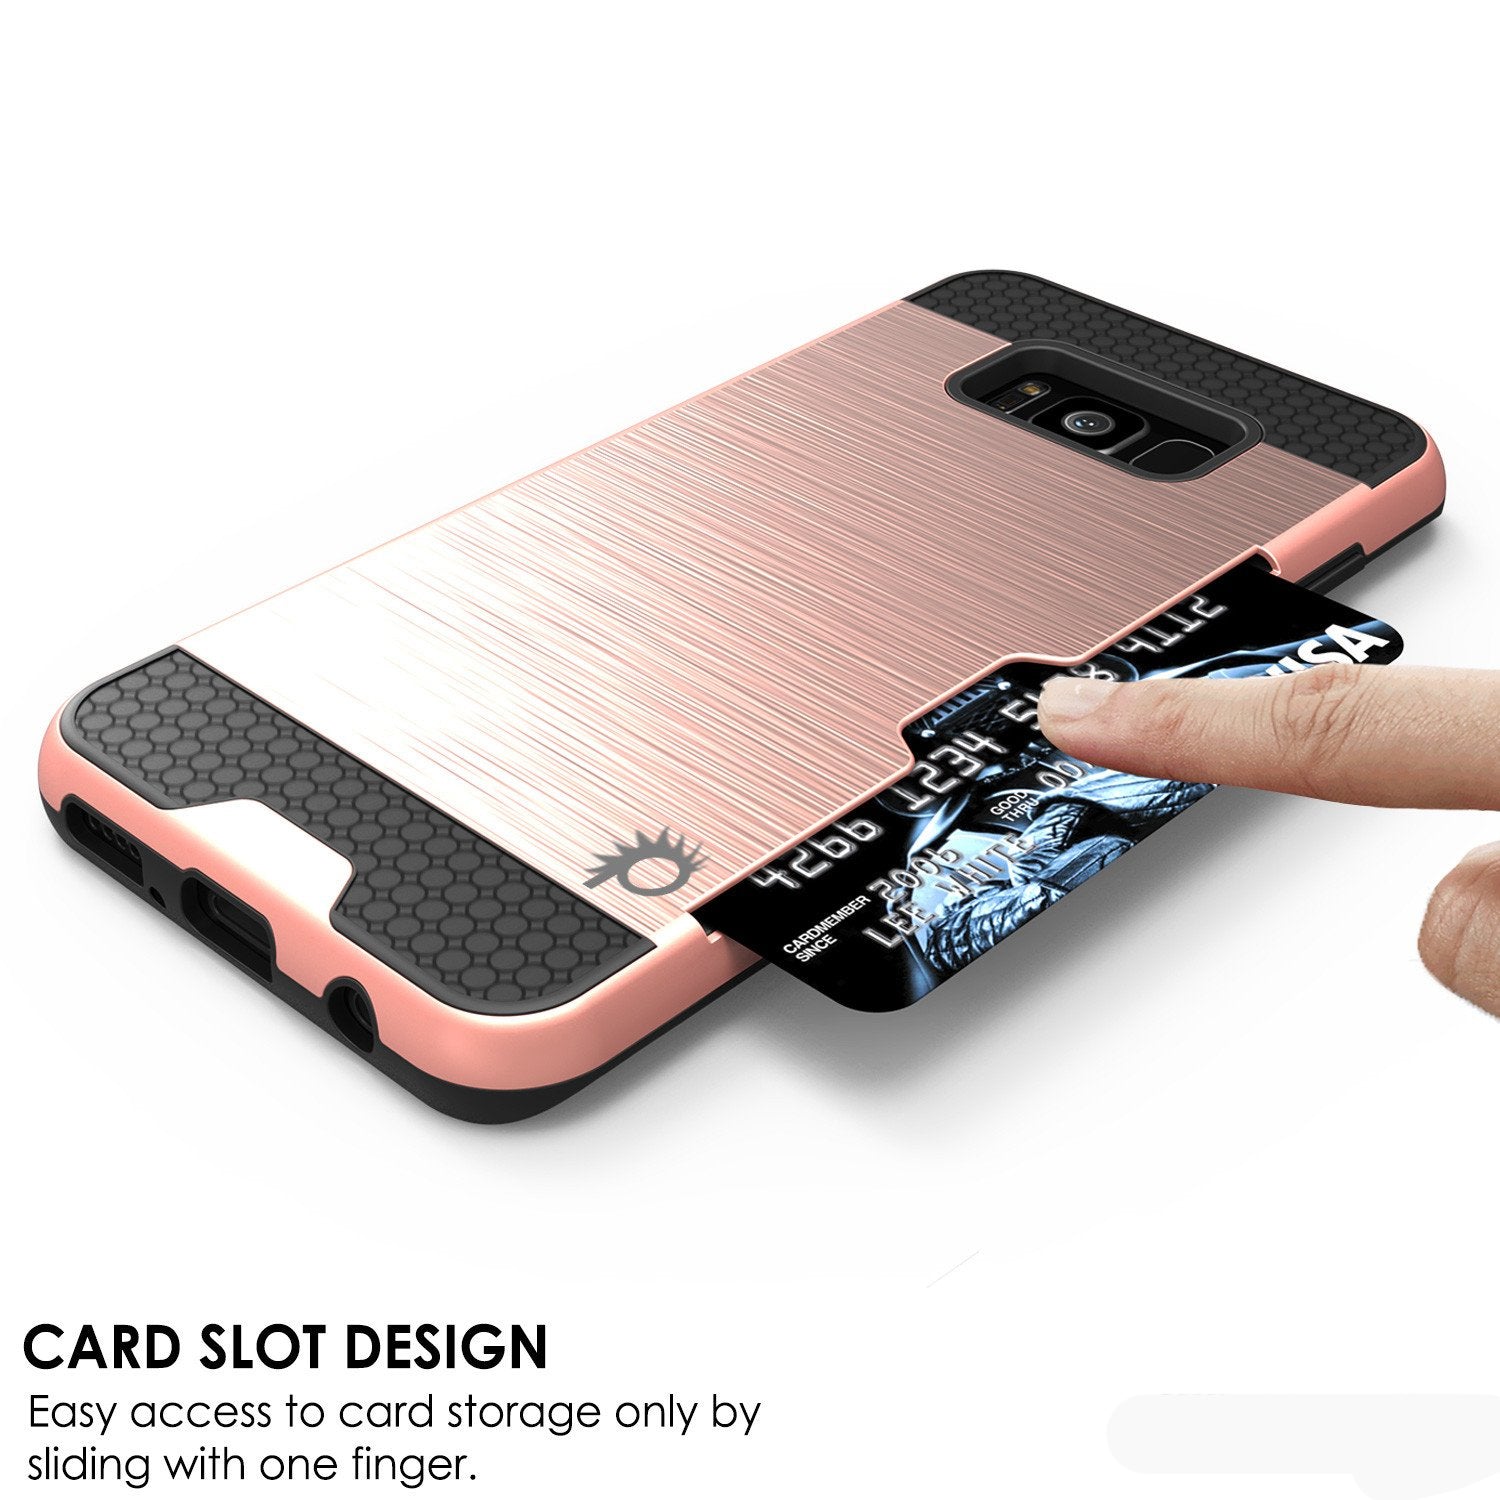 Galaxy S8 Plus Case PunkCase SLOT Rose Series Slim Armor Soft Cover Case